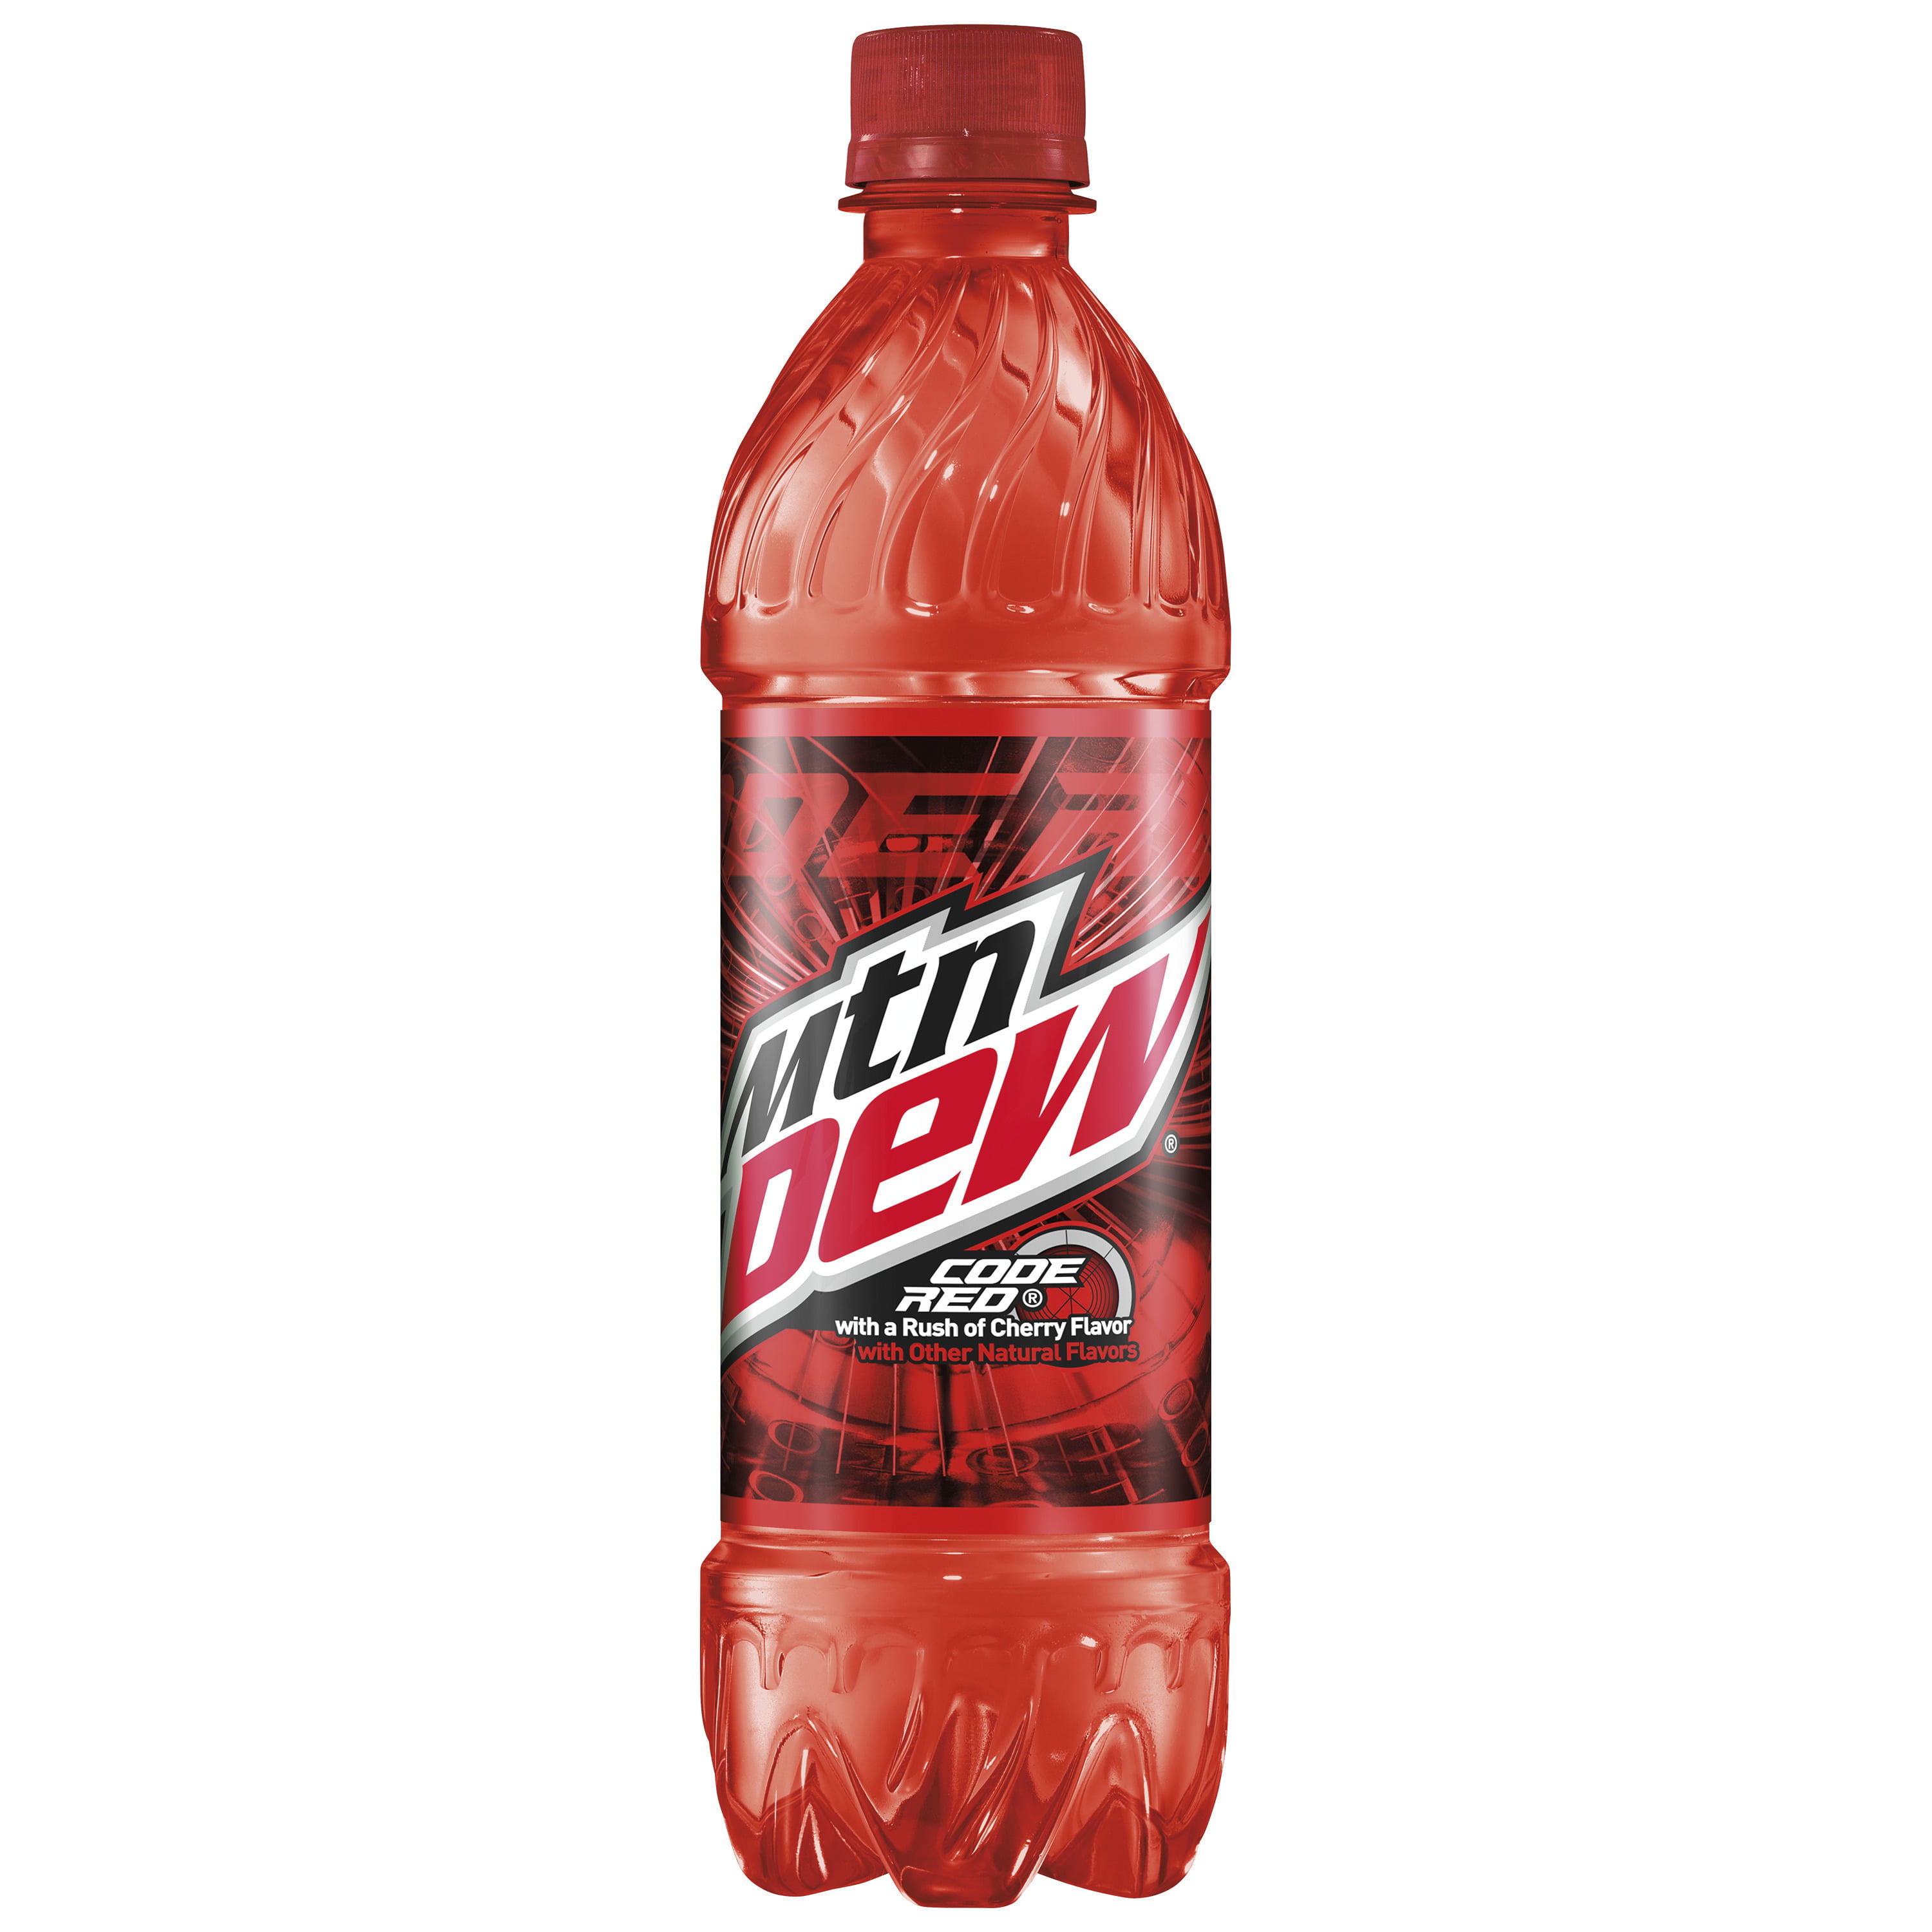 mountain-dew-code-red-soda16-9-oz-bottles-6-count-walmart